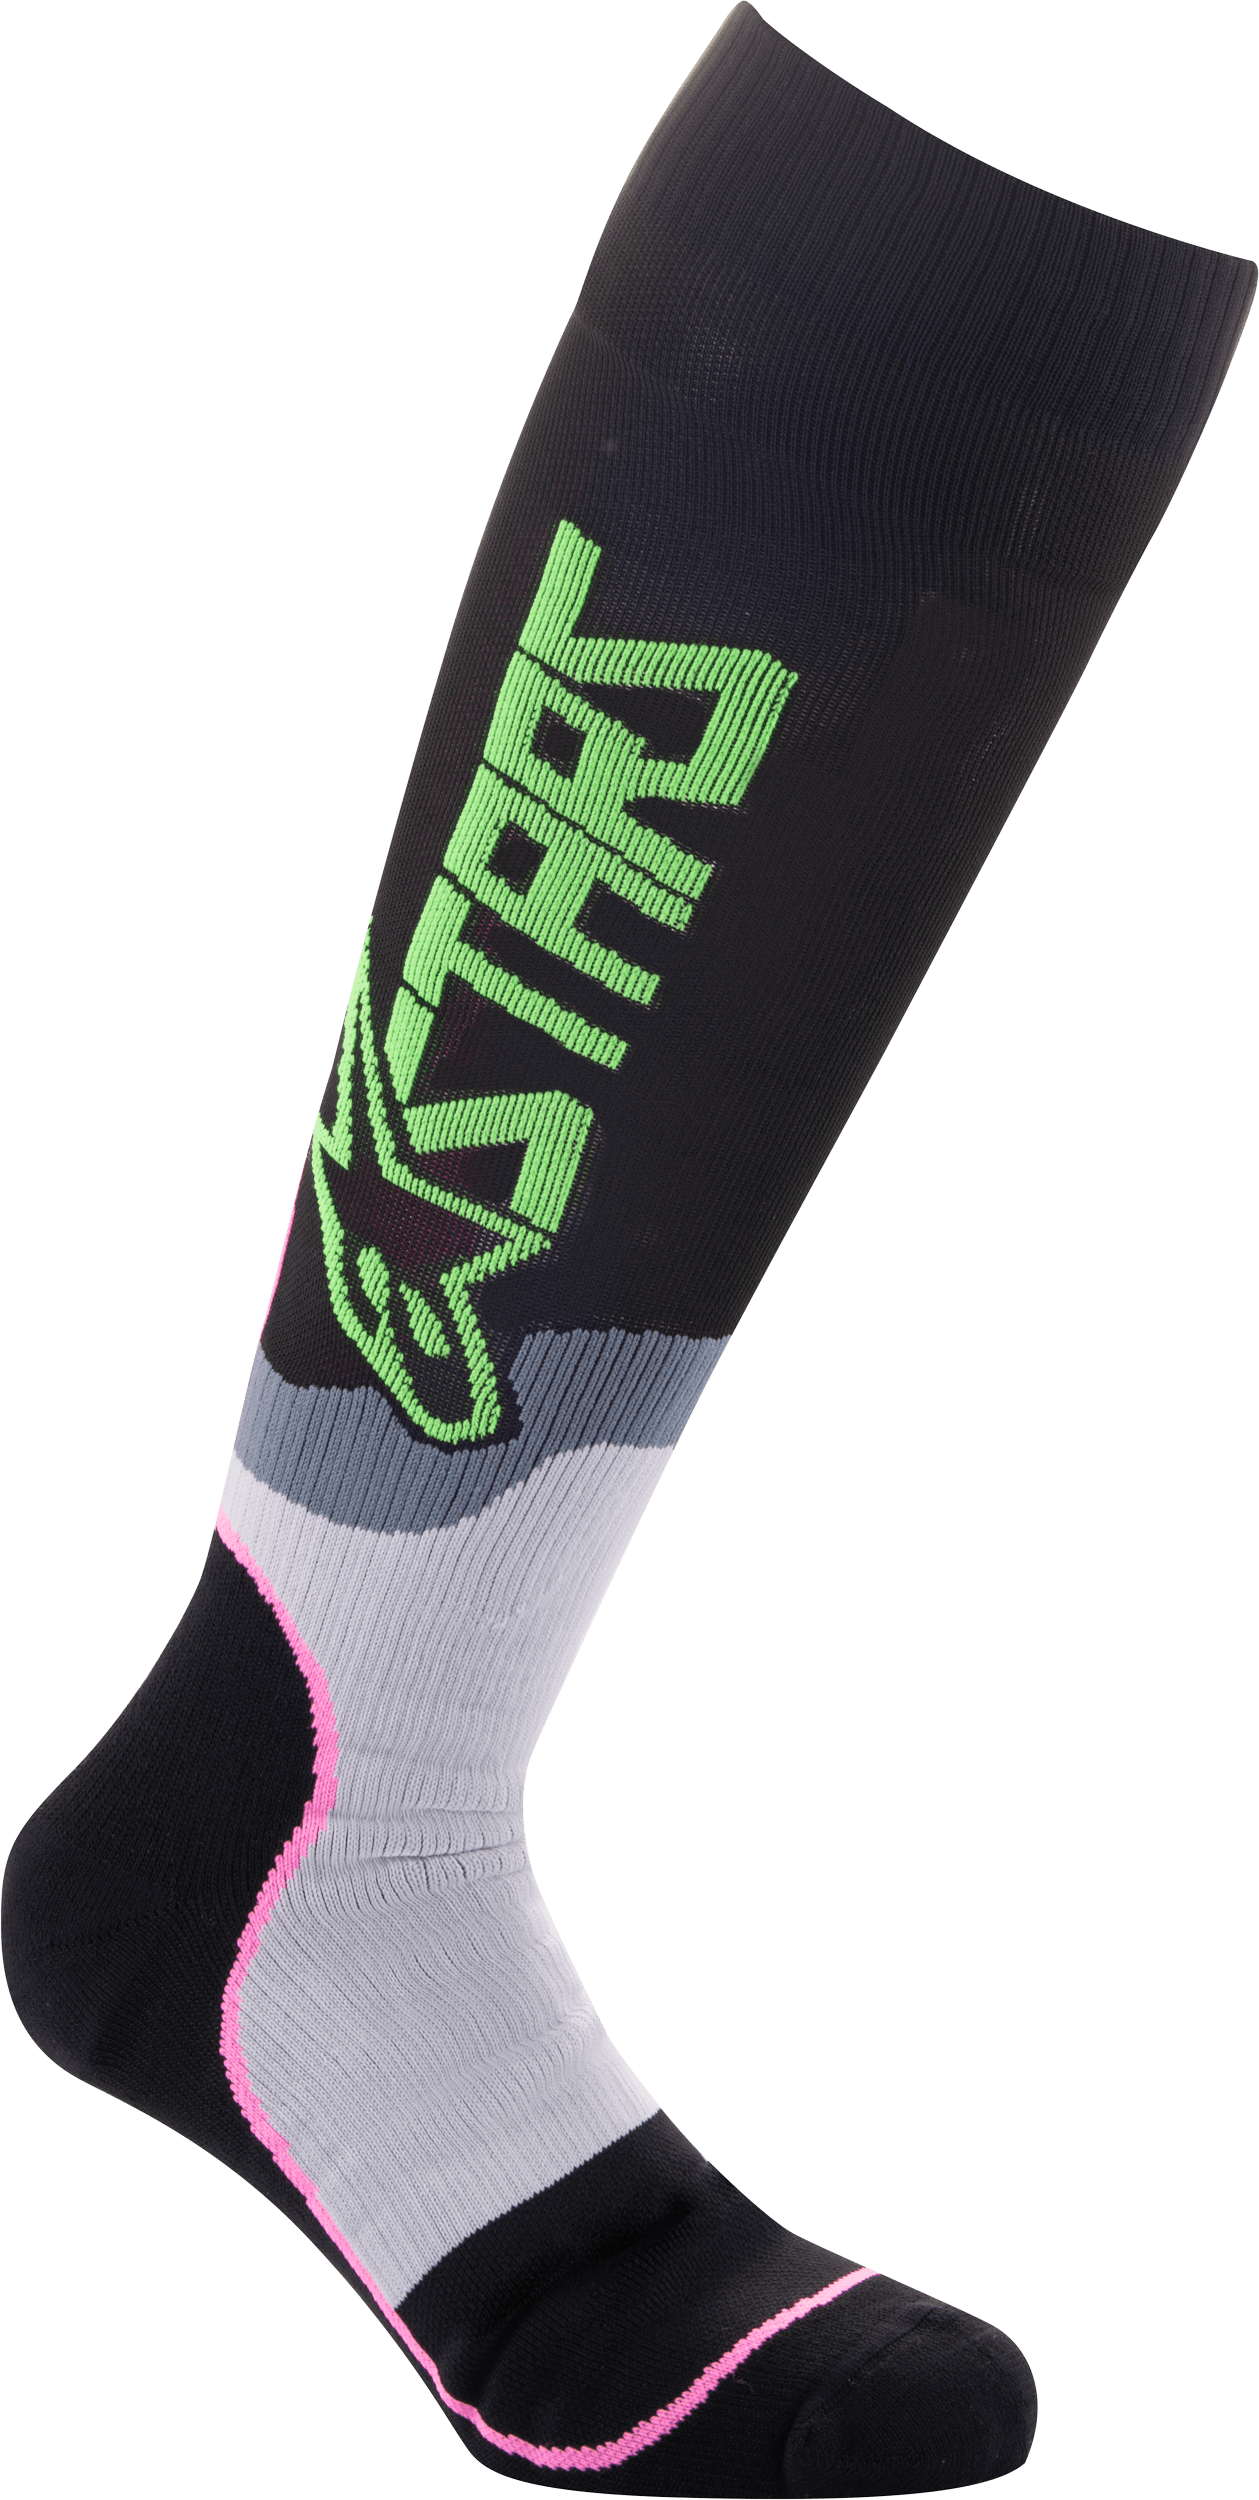 Western Powersports Socks Black/Neon Green/Fluorescent Pink / Youth MD/Youth LG Youth MX Plus-2 Socks by Alpinestars 4741920-1669-M/L